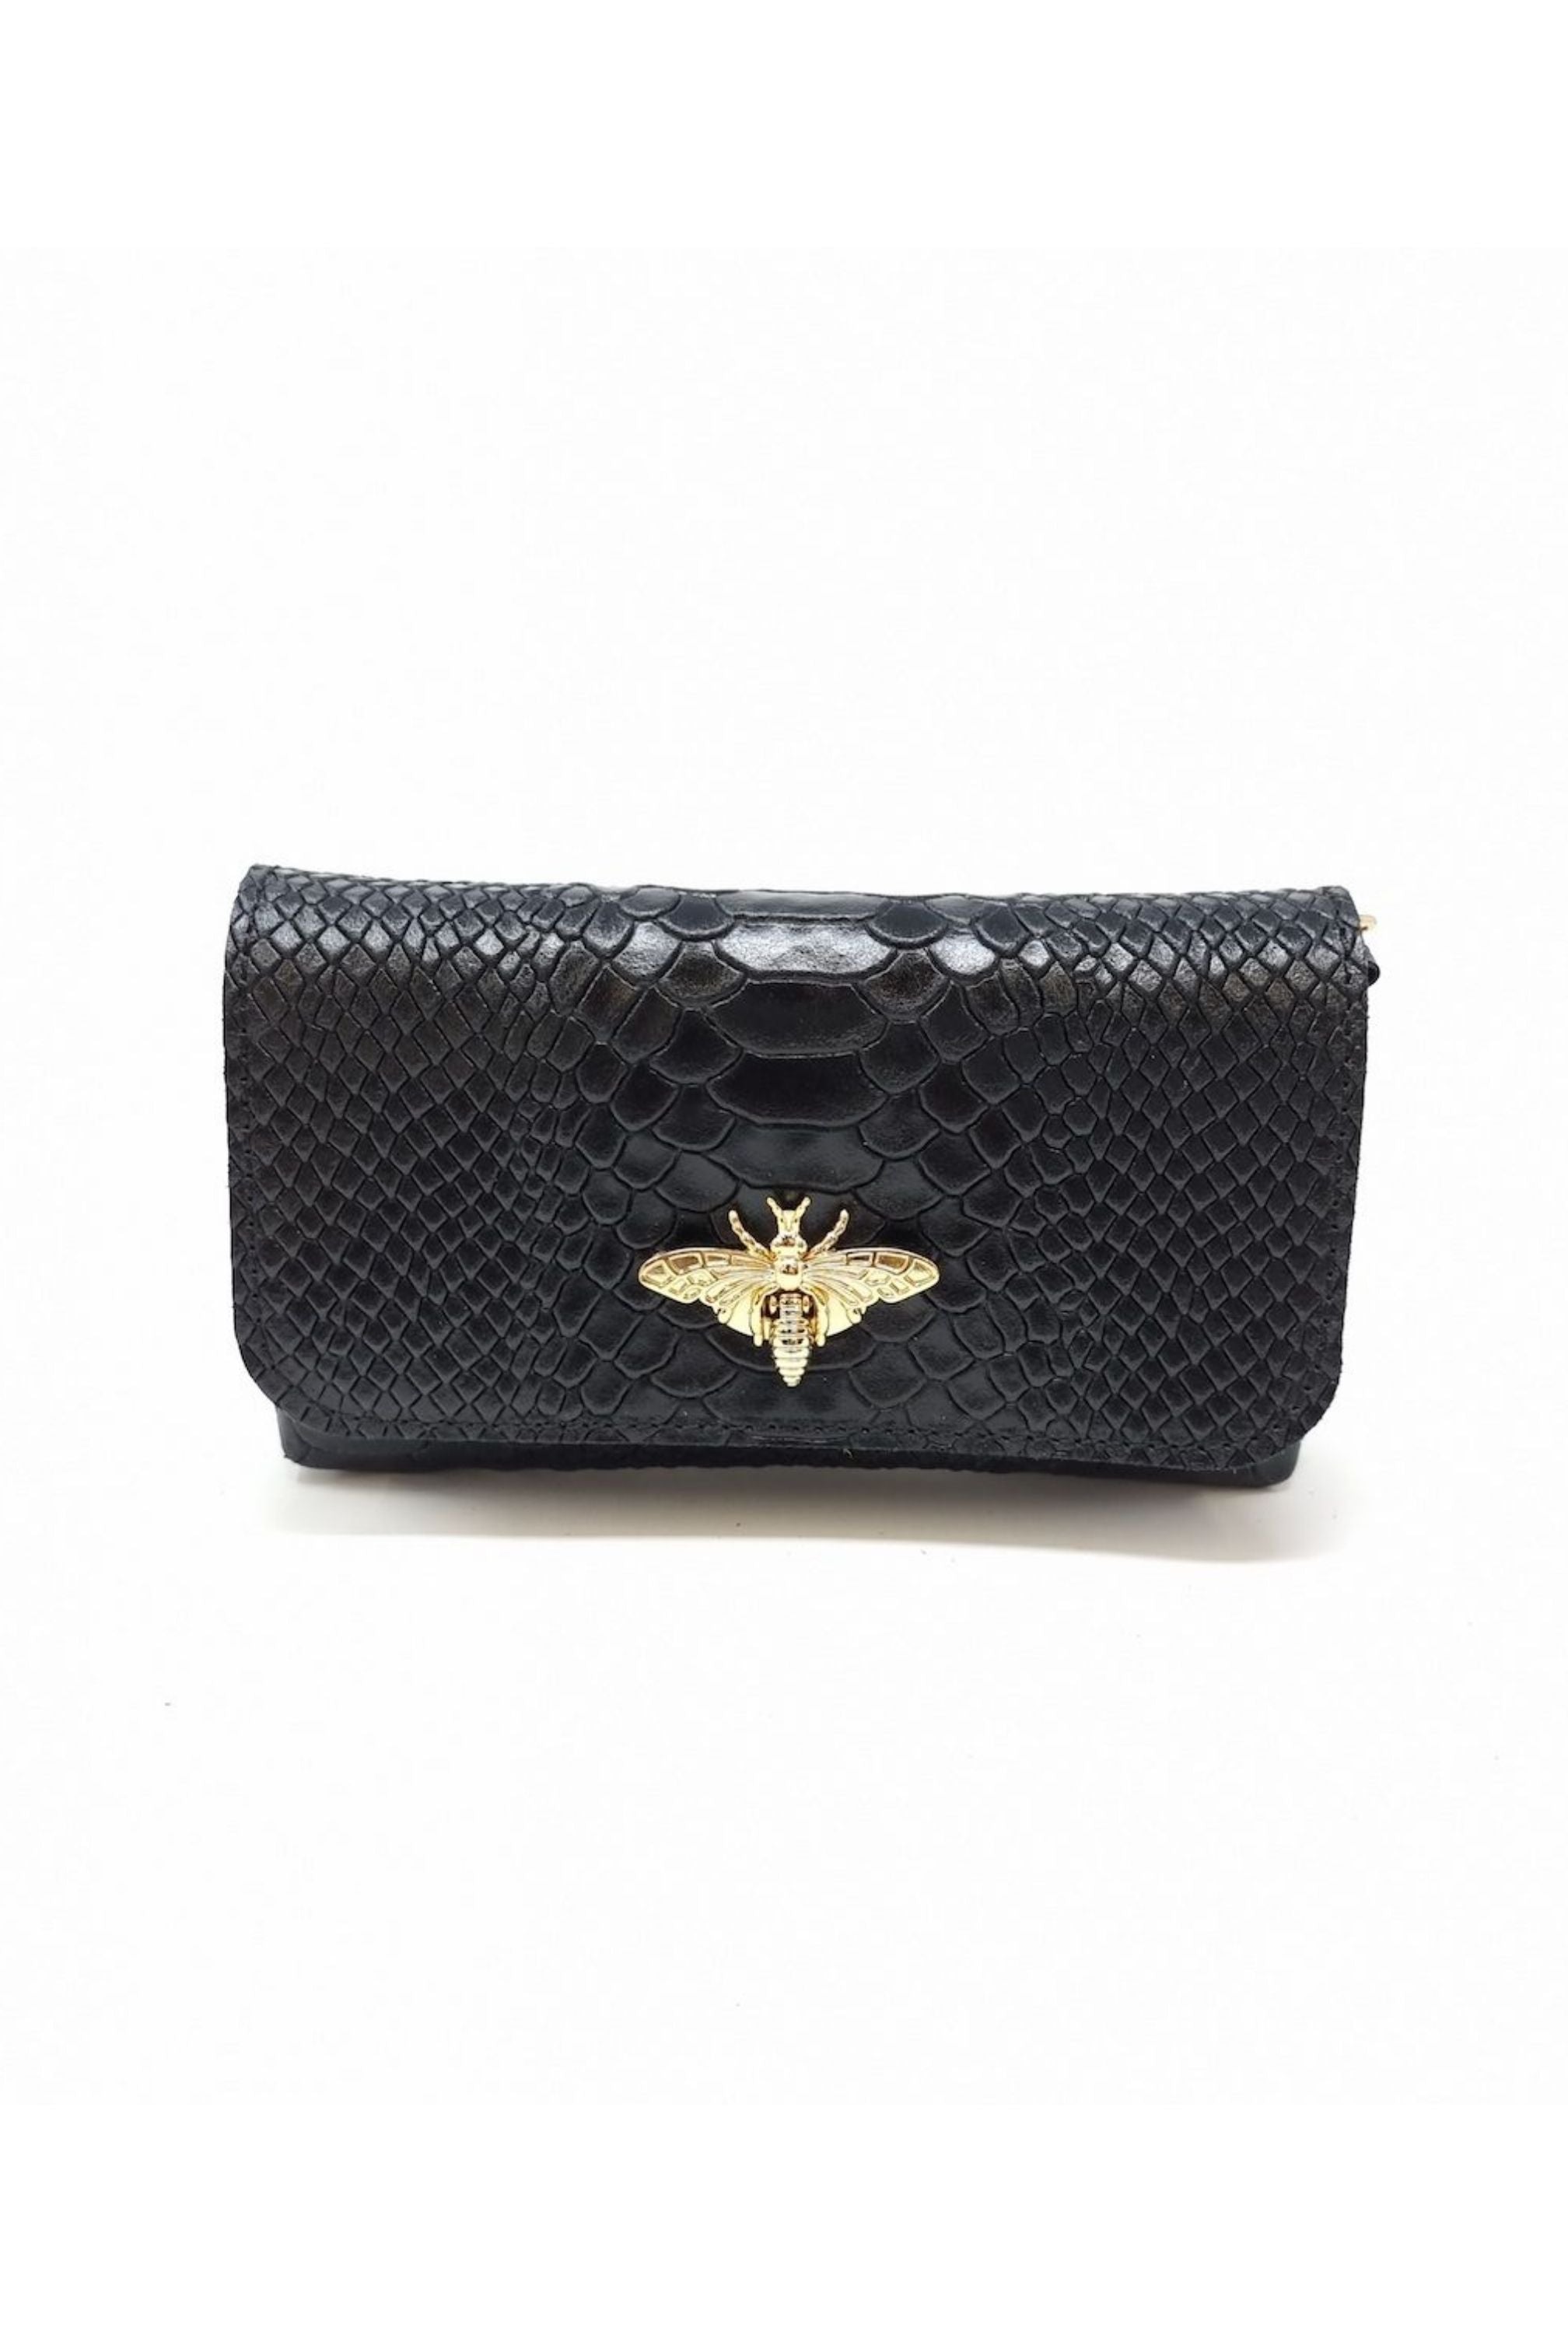 Black handbag with bee embellishment